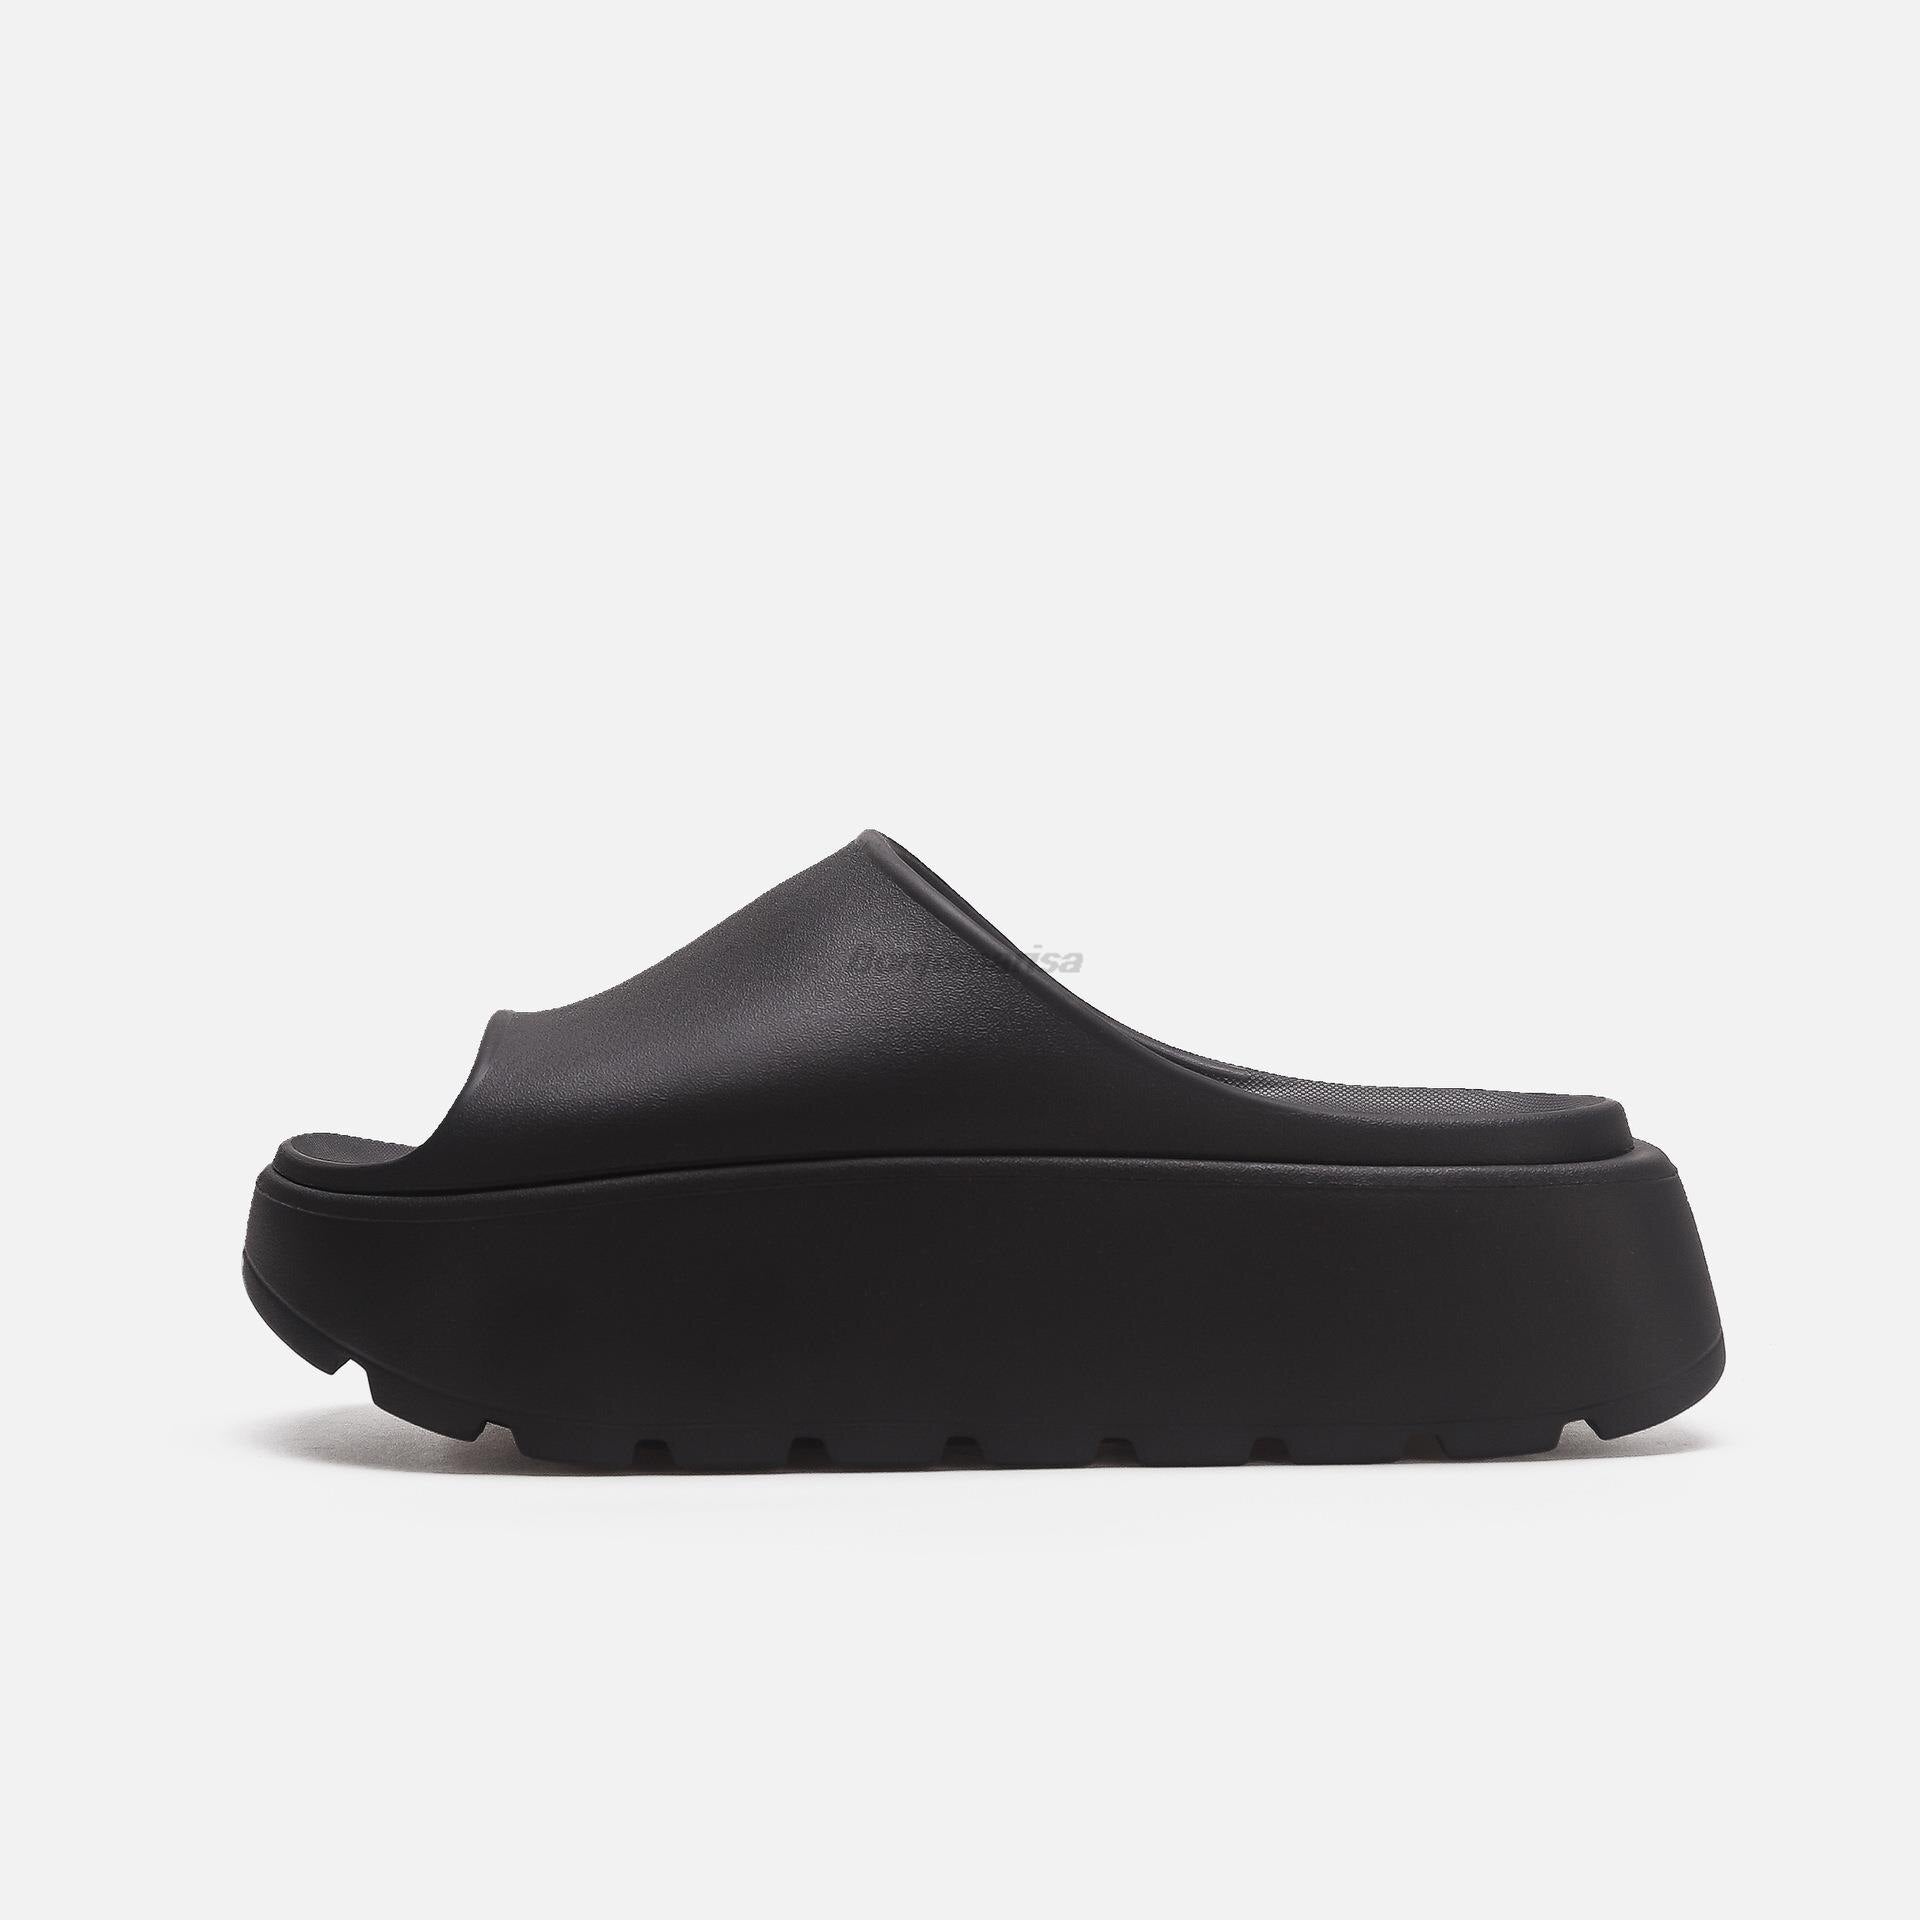 High Platform Sandals For Women Open Toe Summer Wedge Chunky Shoes Slip On Outdoor Indoor Waterproof Beach Sandals